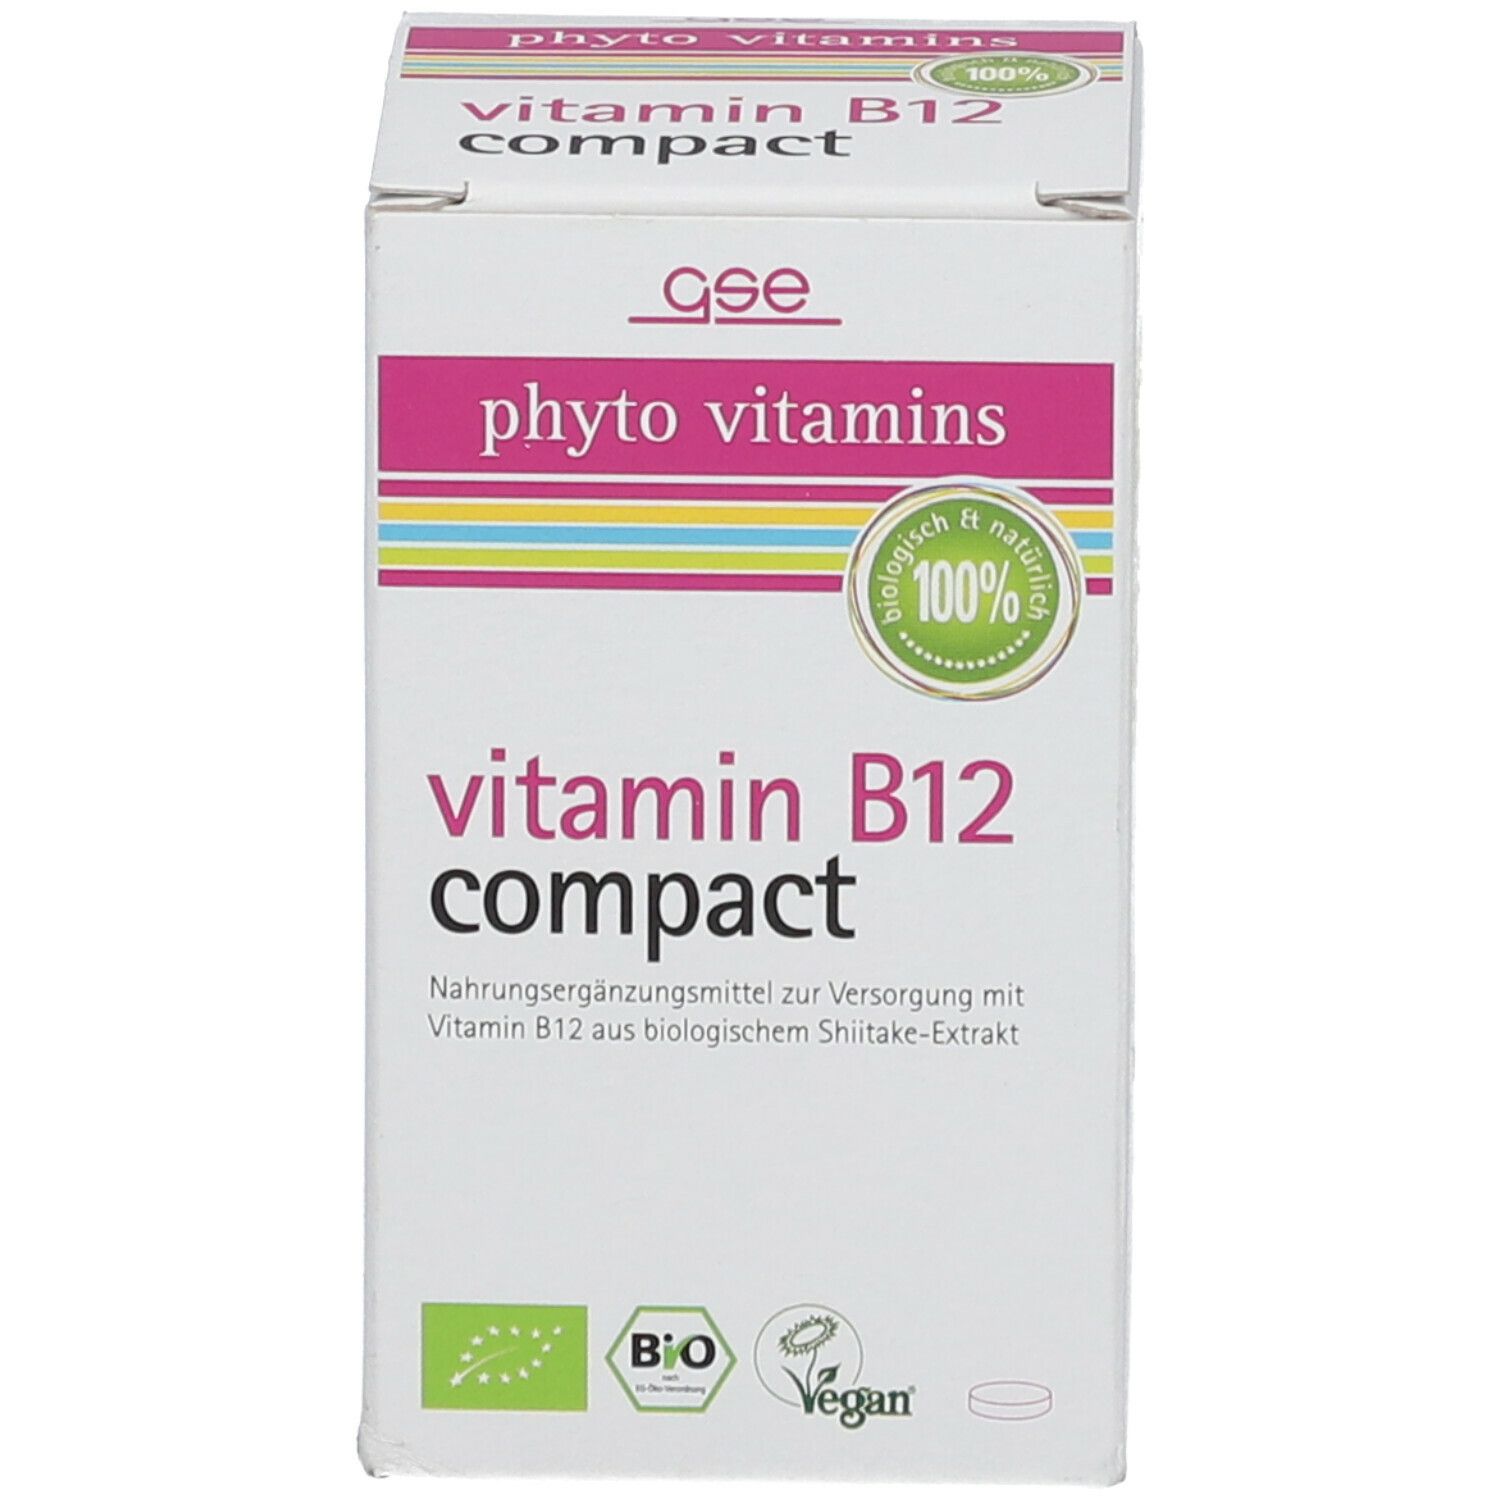 GSE vitamine B12 compacte